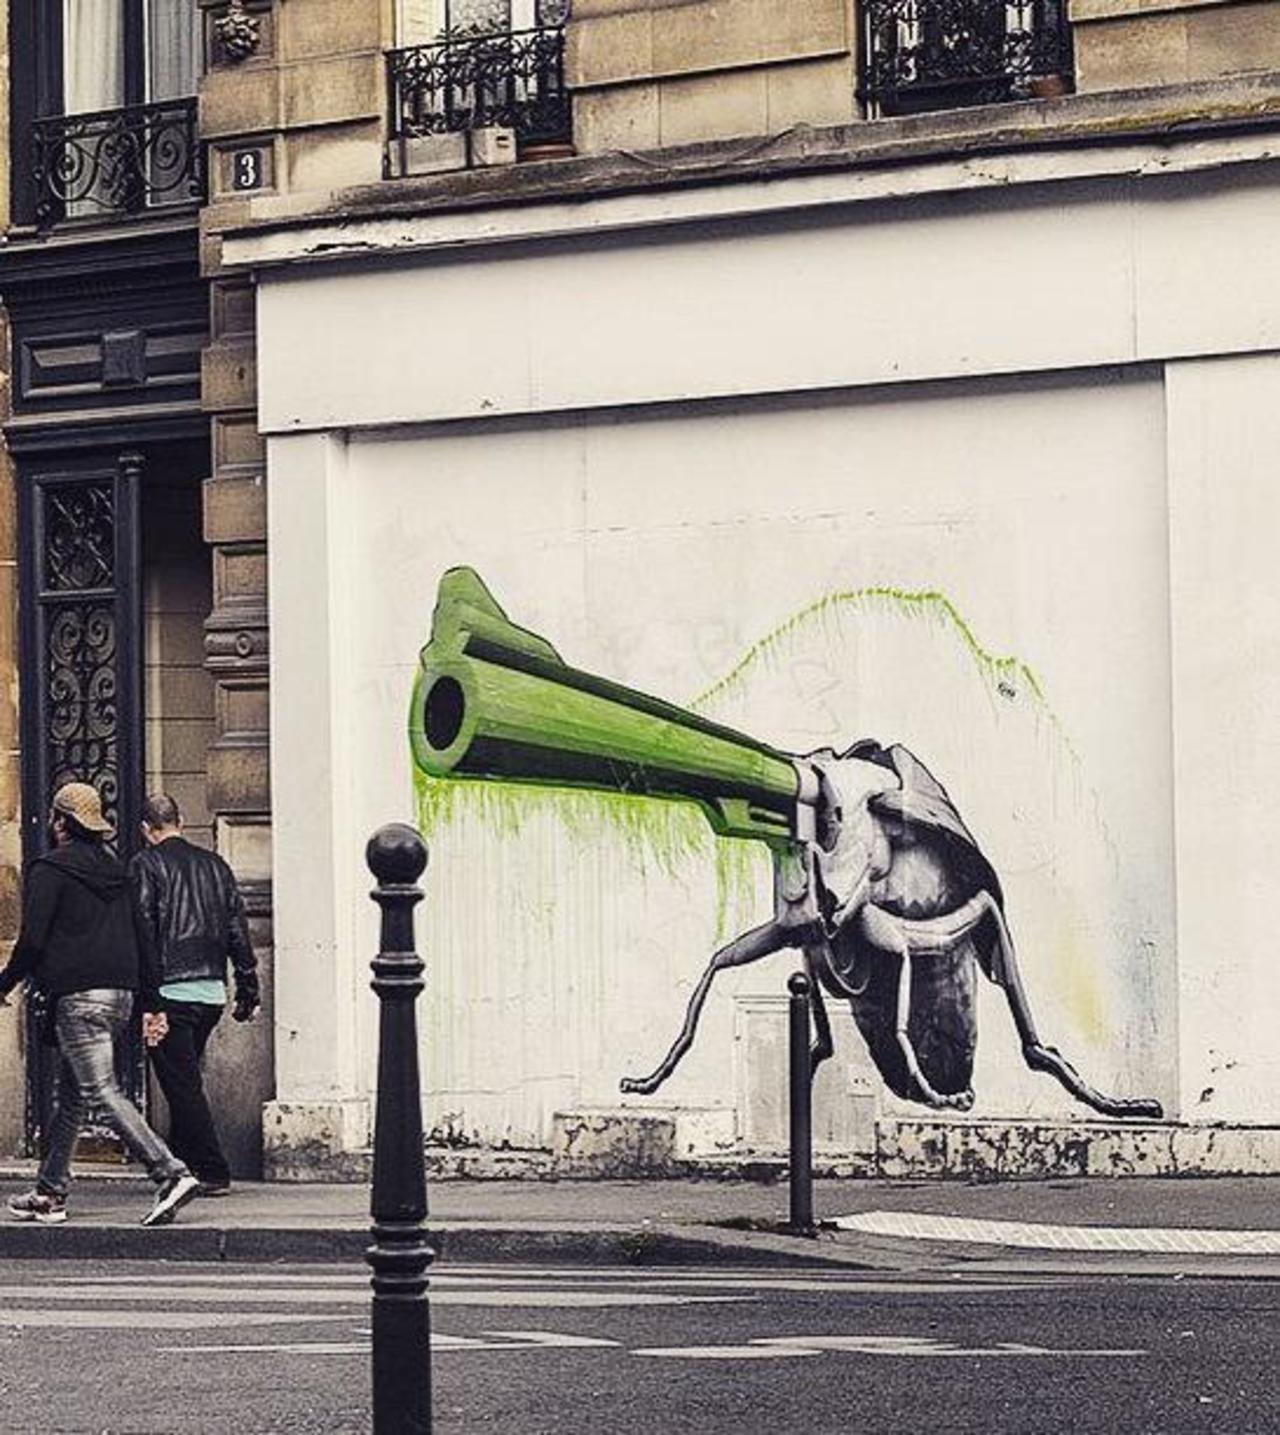 Technology merges with nature.
Street Art by Ludo in Paris 

#art #arte #graffiti #streetart http://t.co/1lVIwa38vX